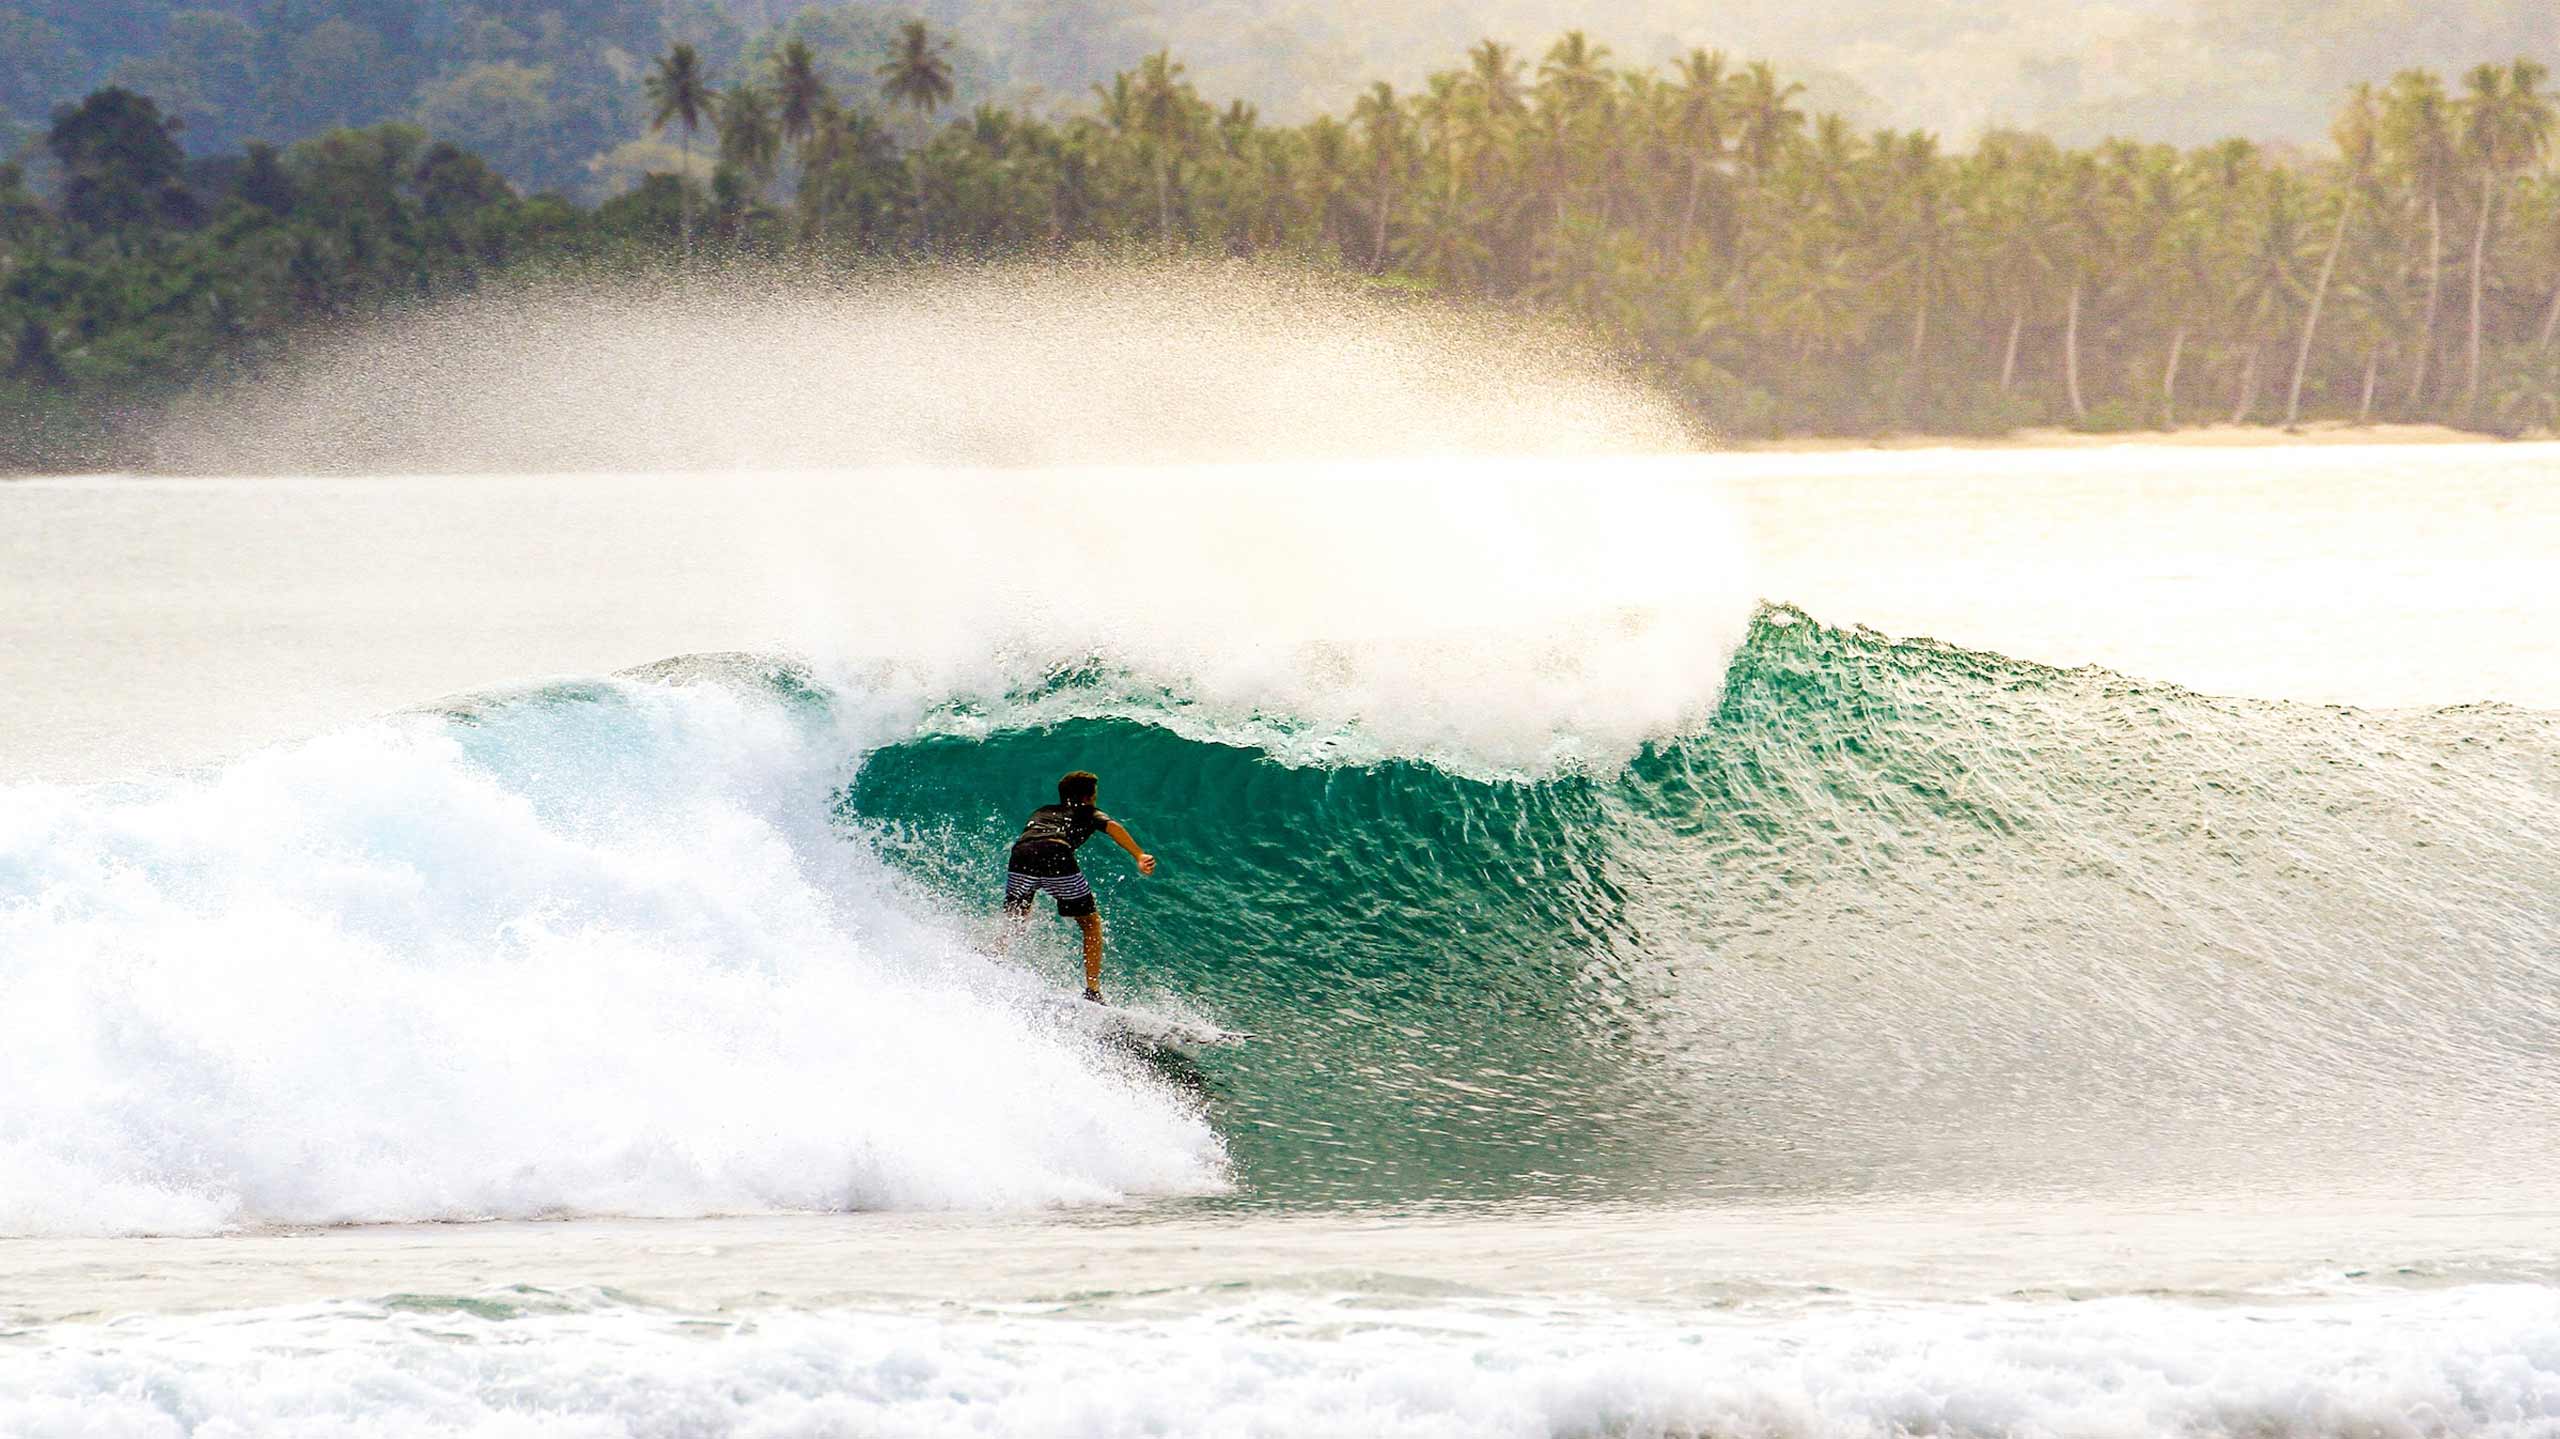 Surfing waves in the Mentawai Islands in Indonesa